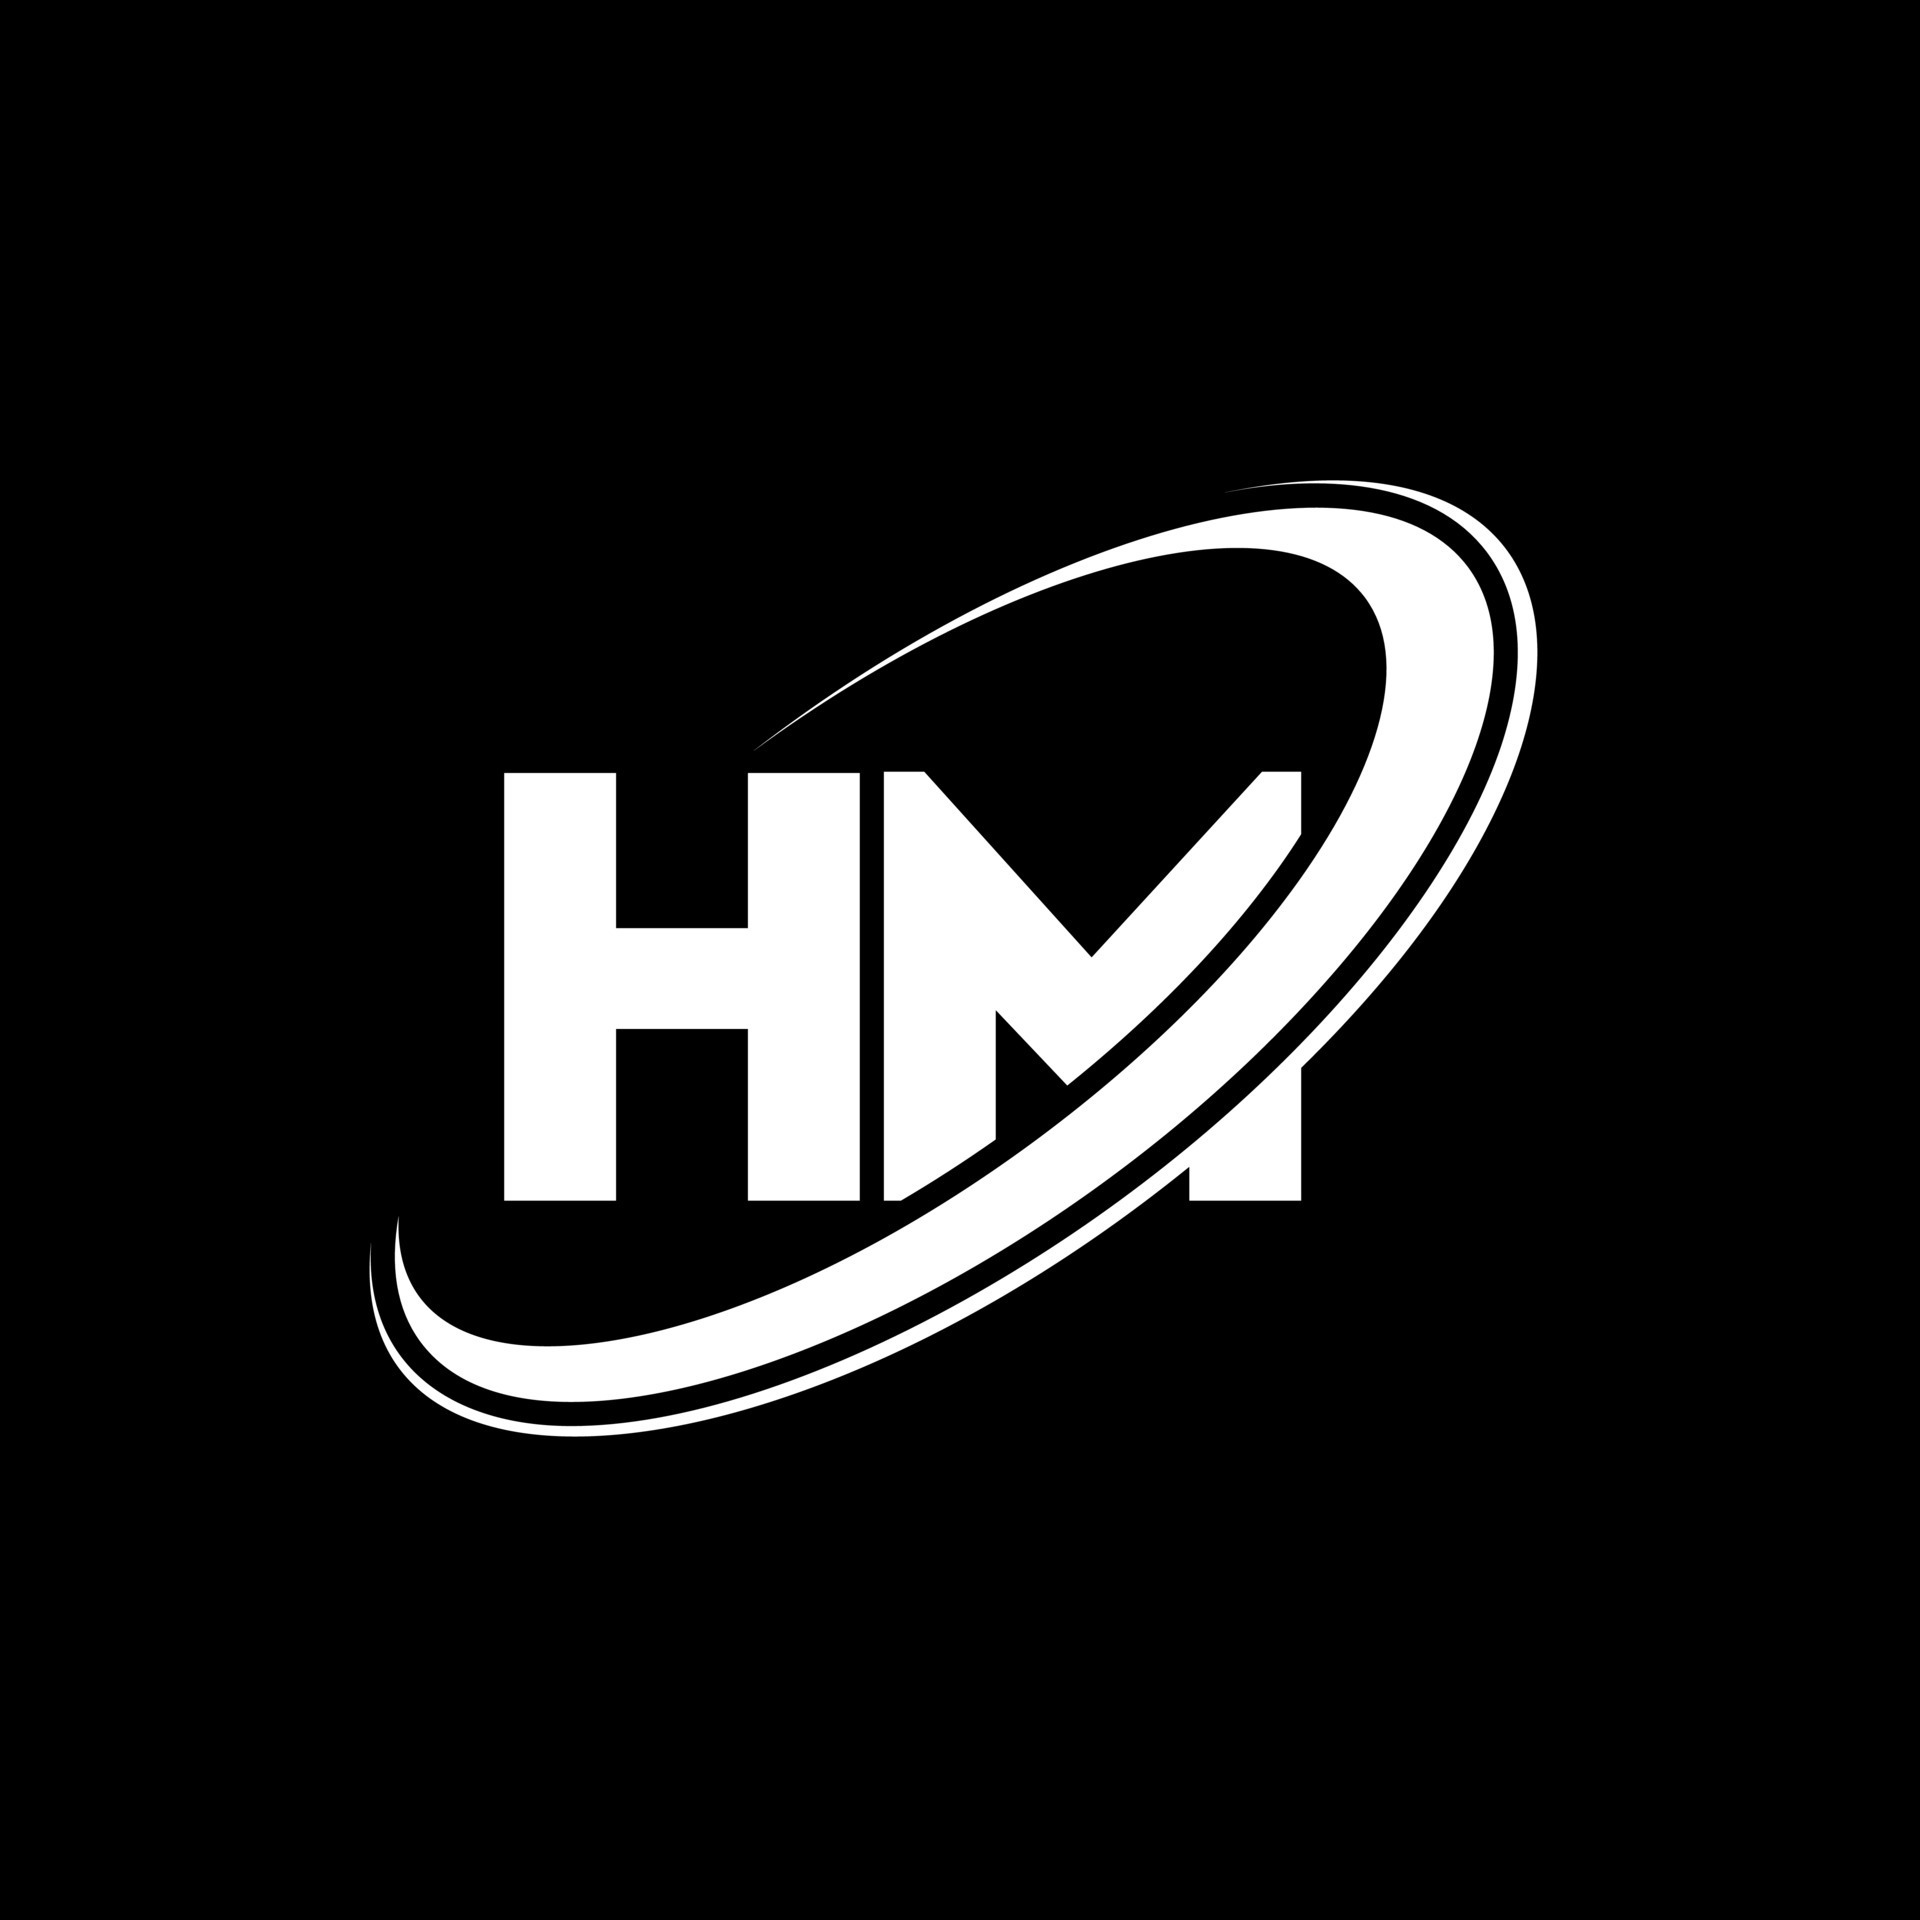 HM H M letter logo design. Initial letter HM linked circle ...